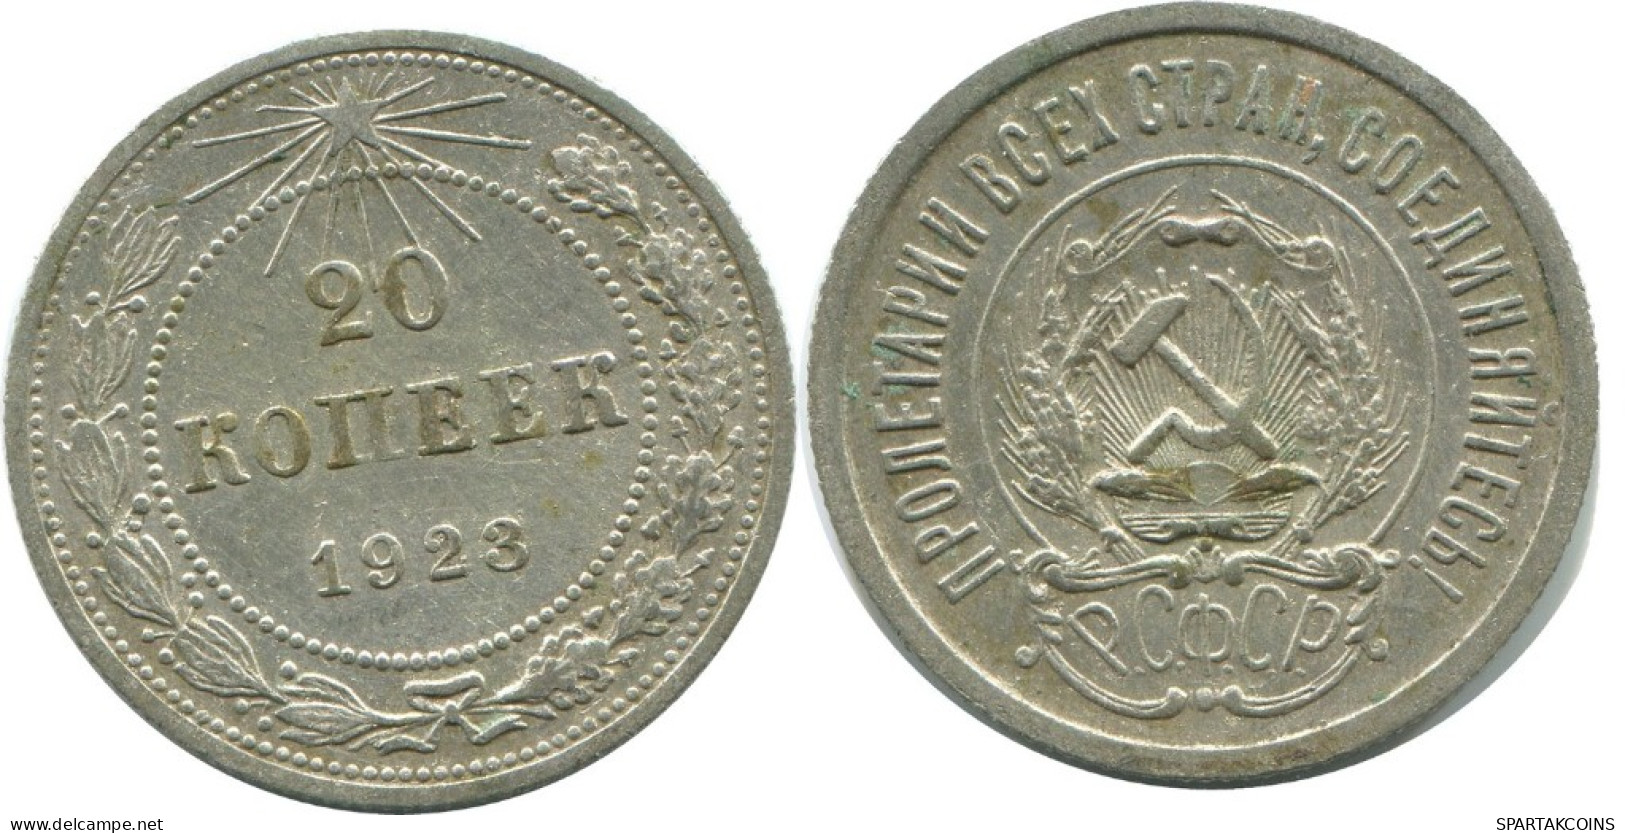 20 KOPEKS 1923 RUSSIA RSFSR SILVER Coin HIGH GRADE #AF678.U.A - Rusia